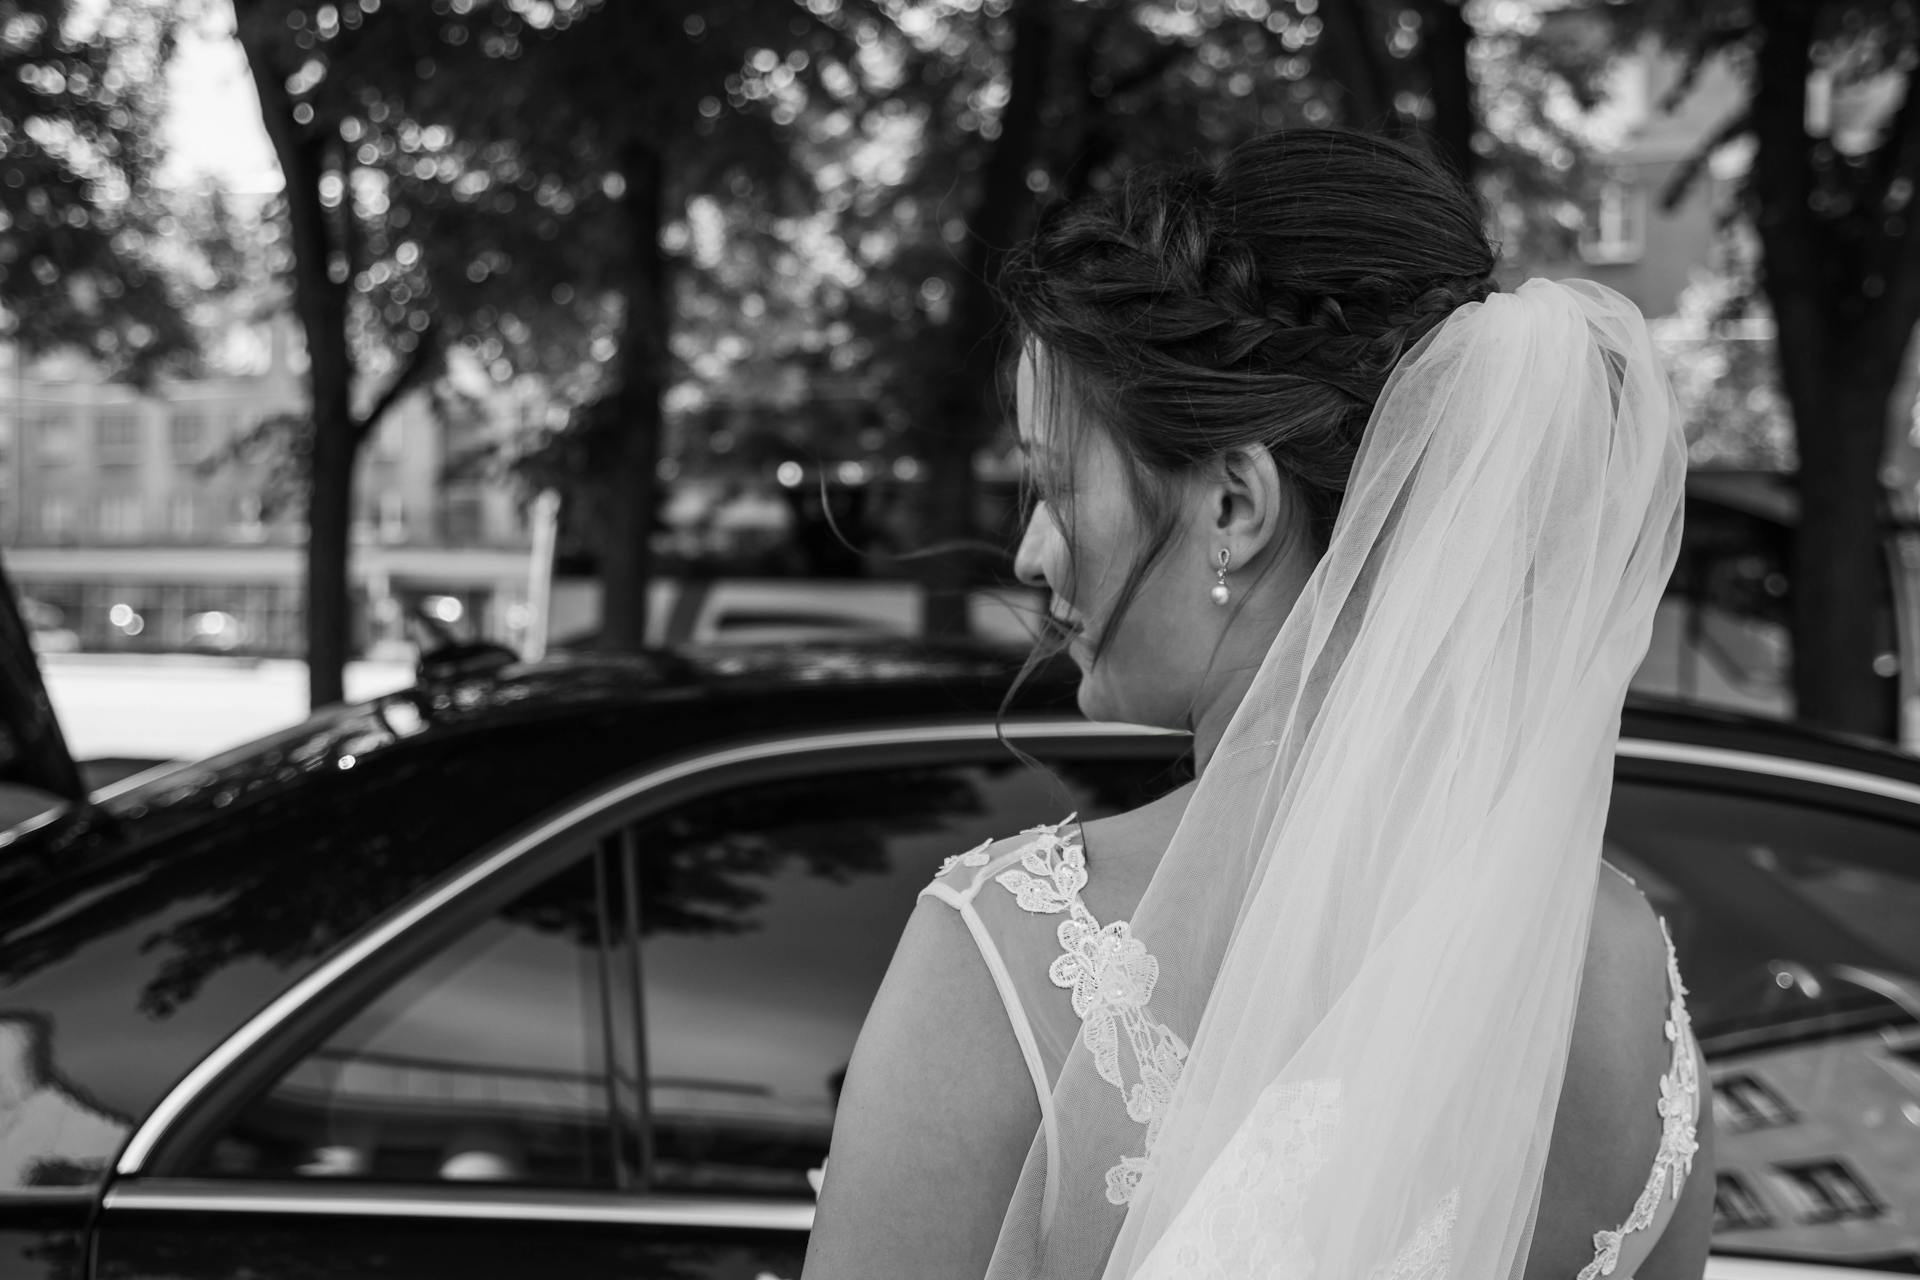 A bride standing near a car | Source: Pexels